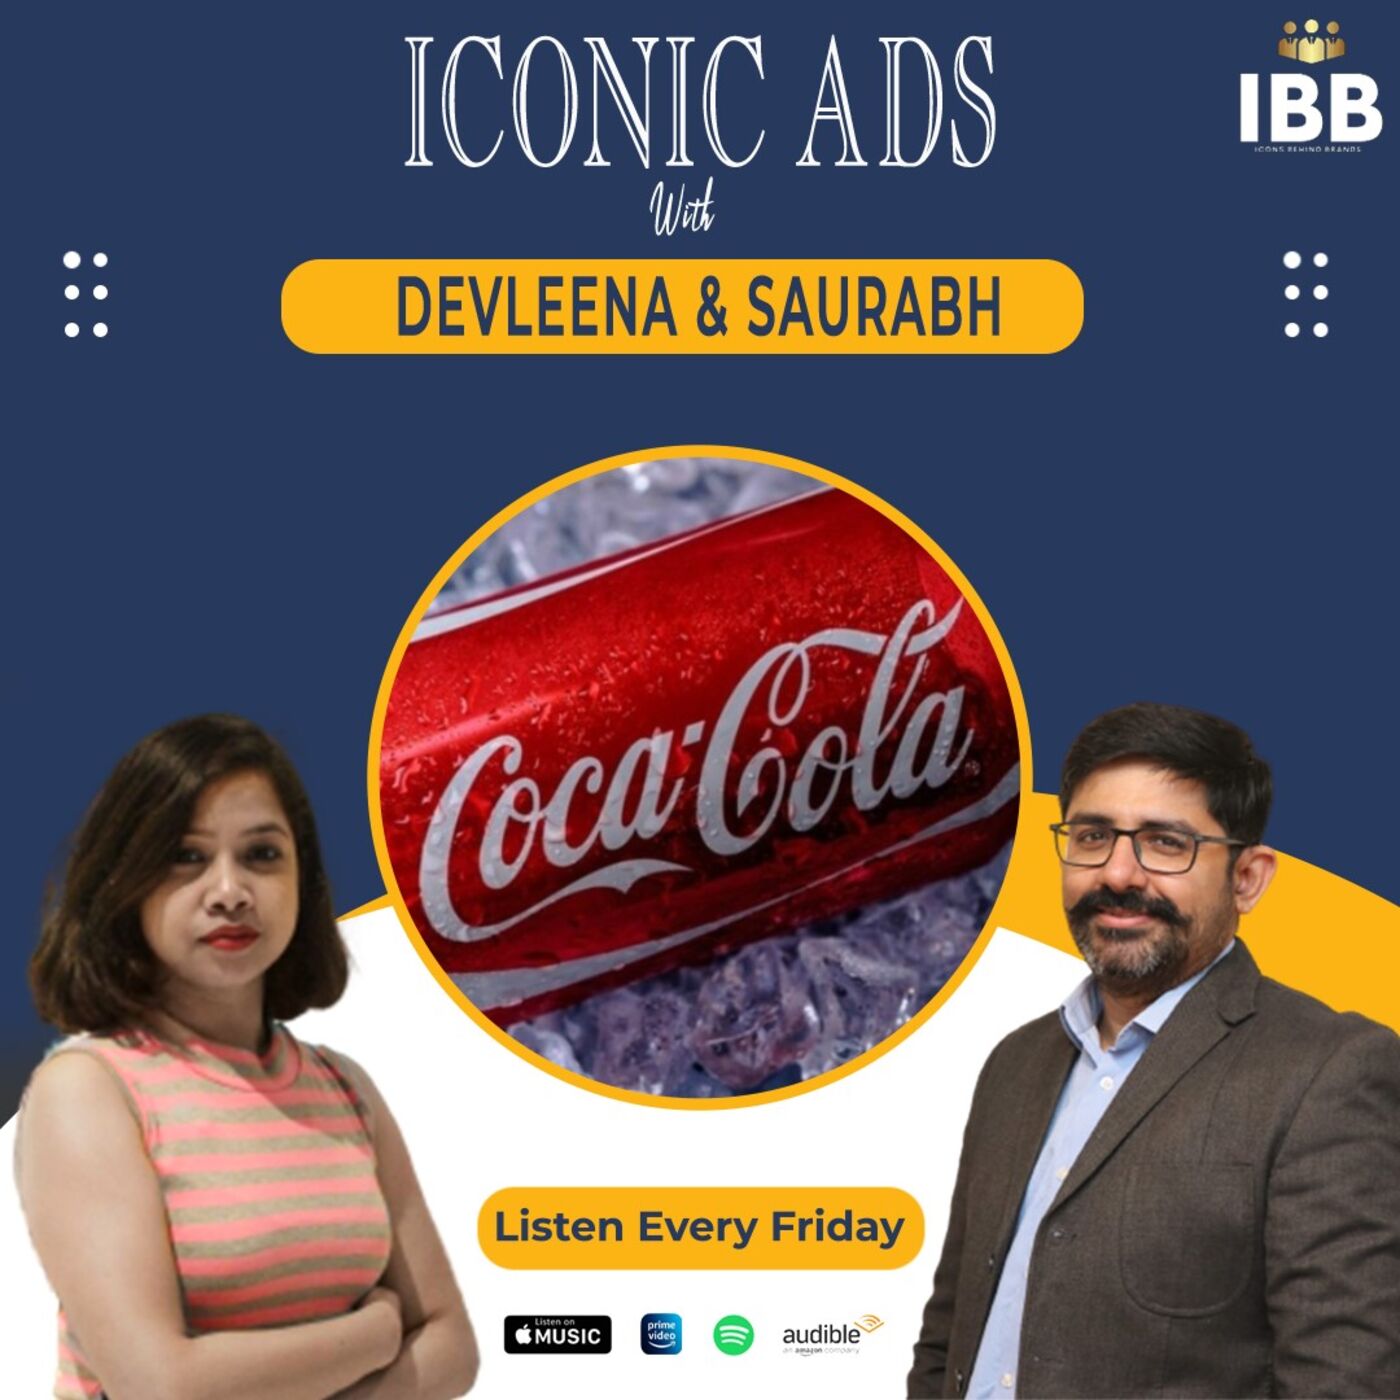 Marketing with Coca Cola!!